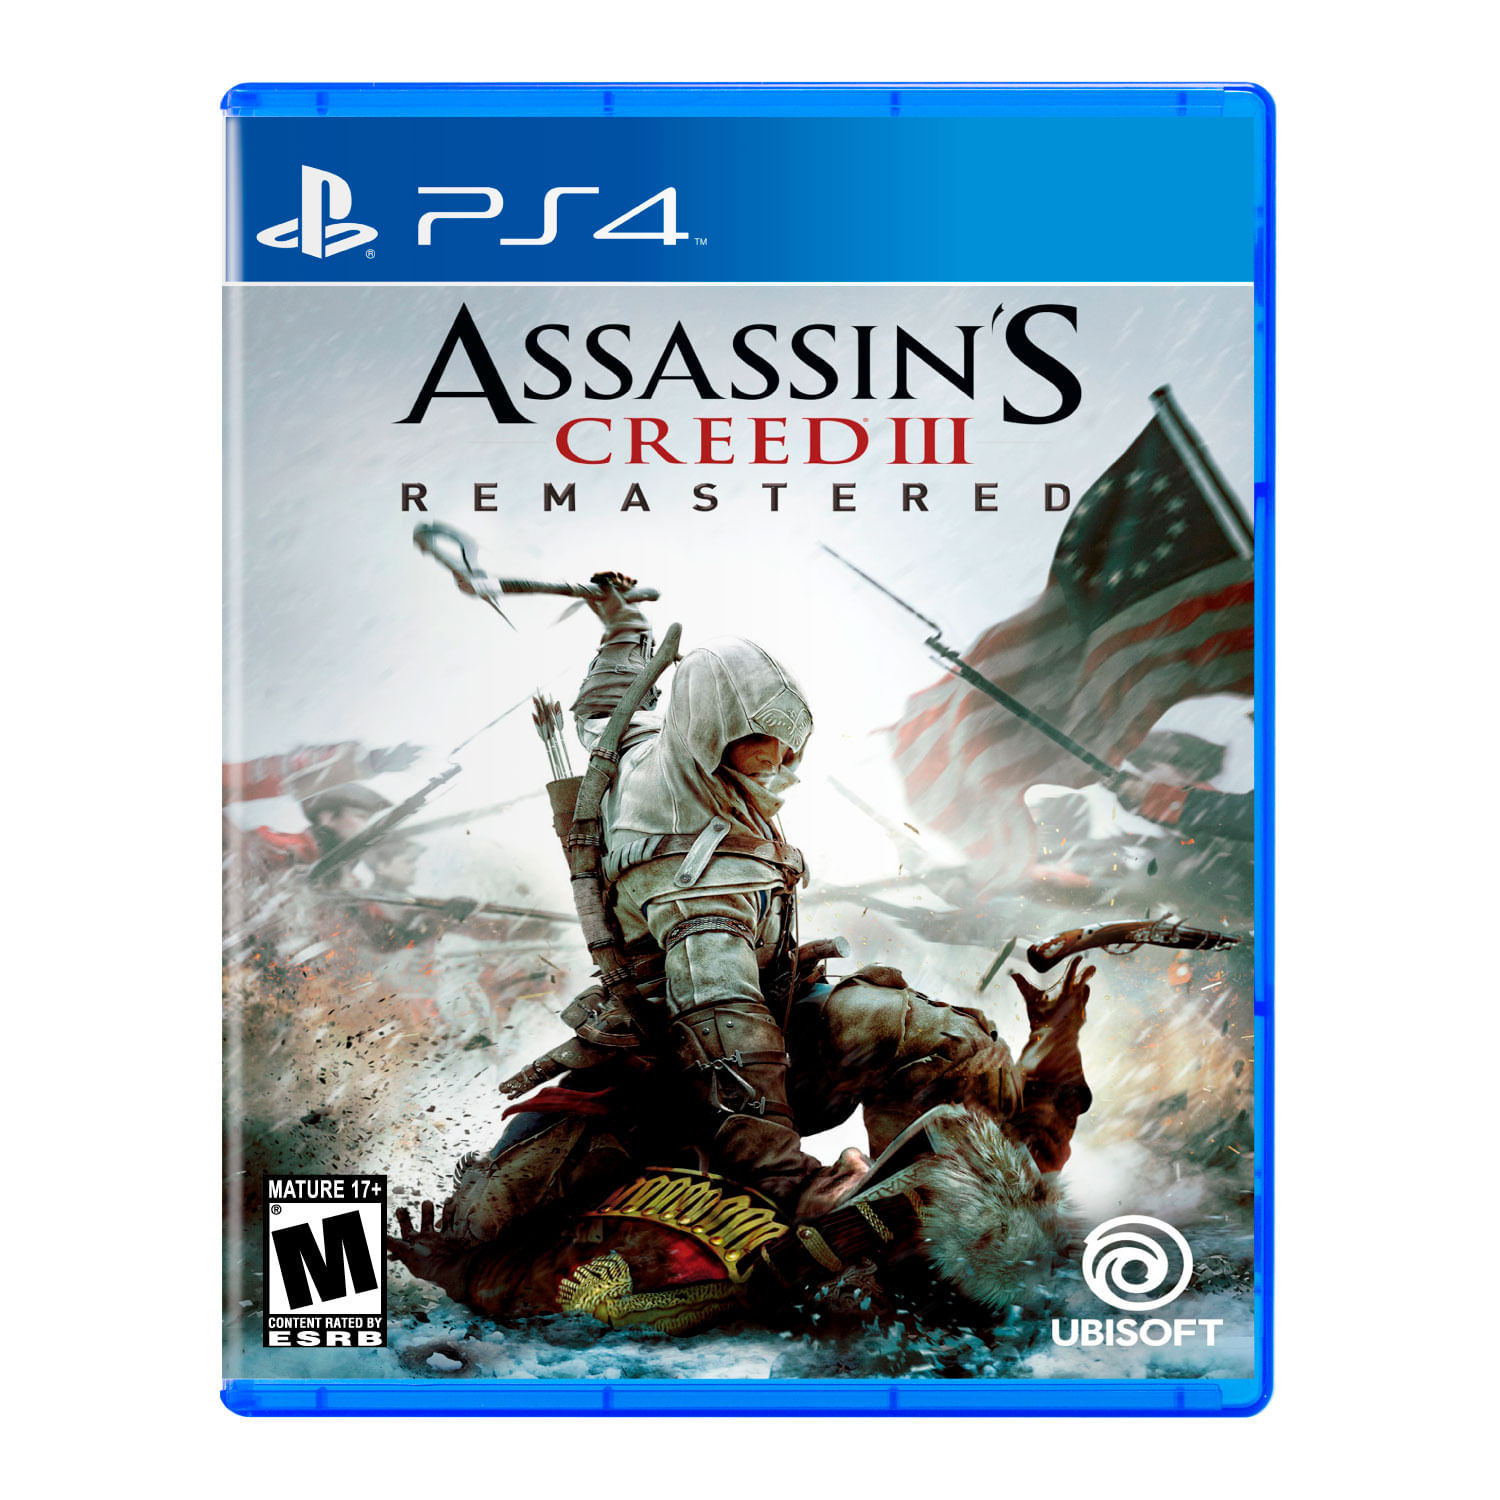 Isaac Campeonato pavo Assassins Creed III Remastered (Latam) - Playstation 4 (PS4) - Coolbox